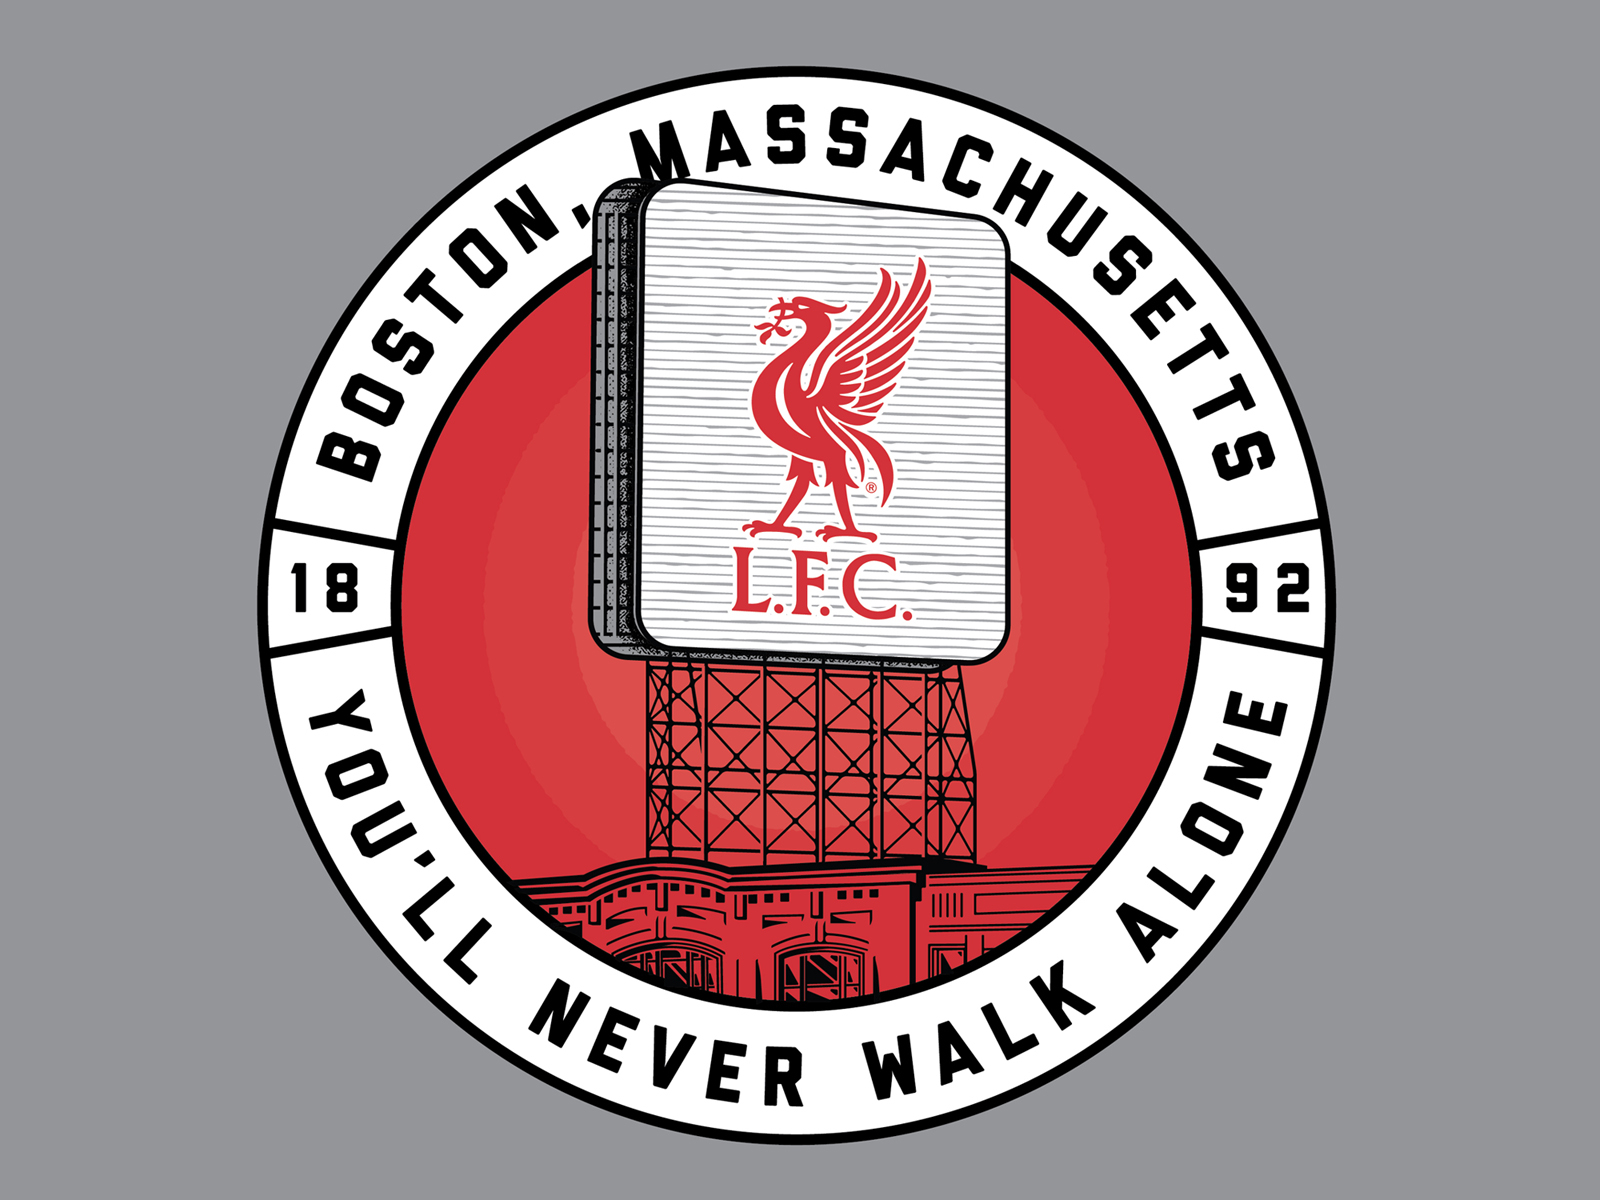 LFC - Boston Landmark apparel boston building citgo fenway illustration landmark lfc liverpool football club sign tee ynwa